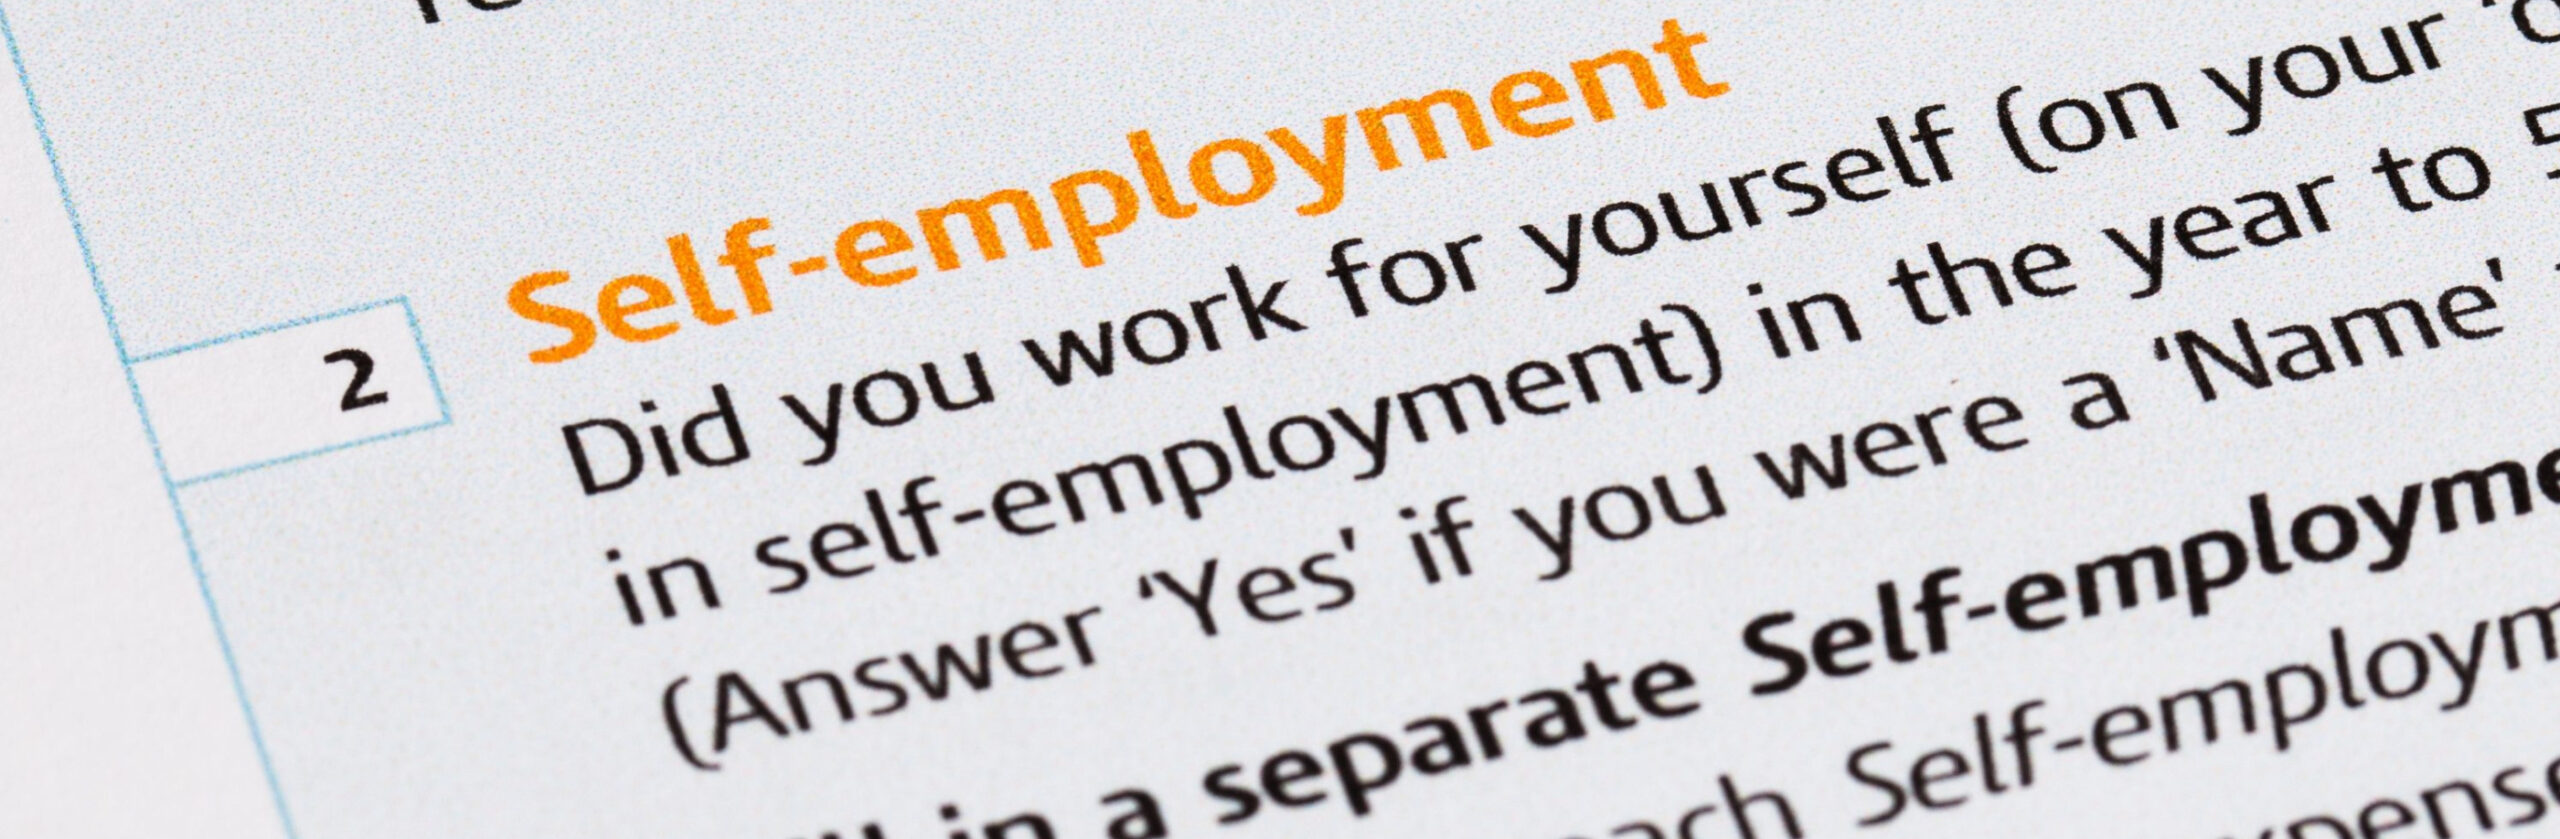 Self-Employed Retirement Plans Westwood, MO | Financial Advisors | Retirement Consultants Near Westwood